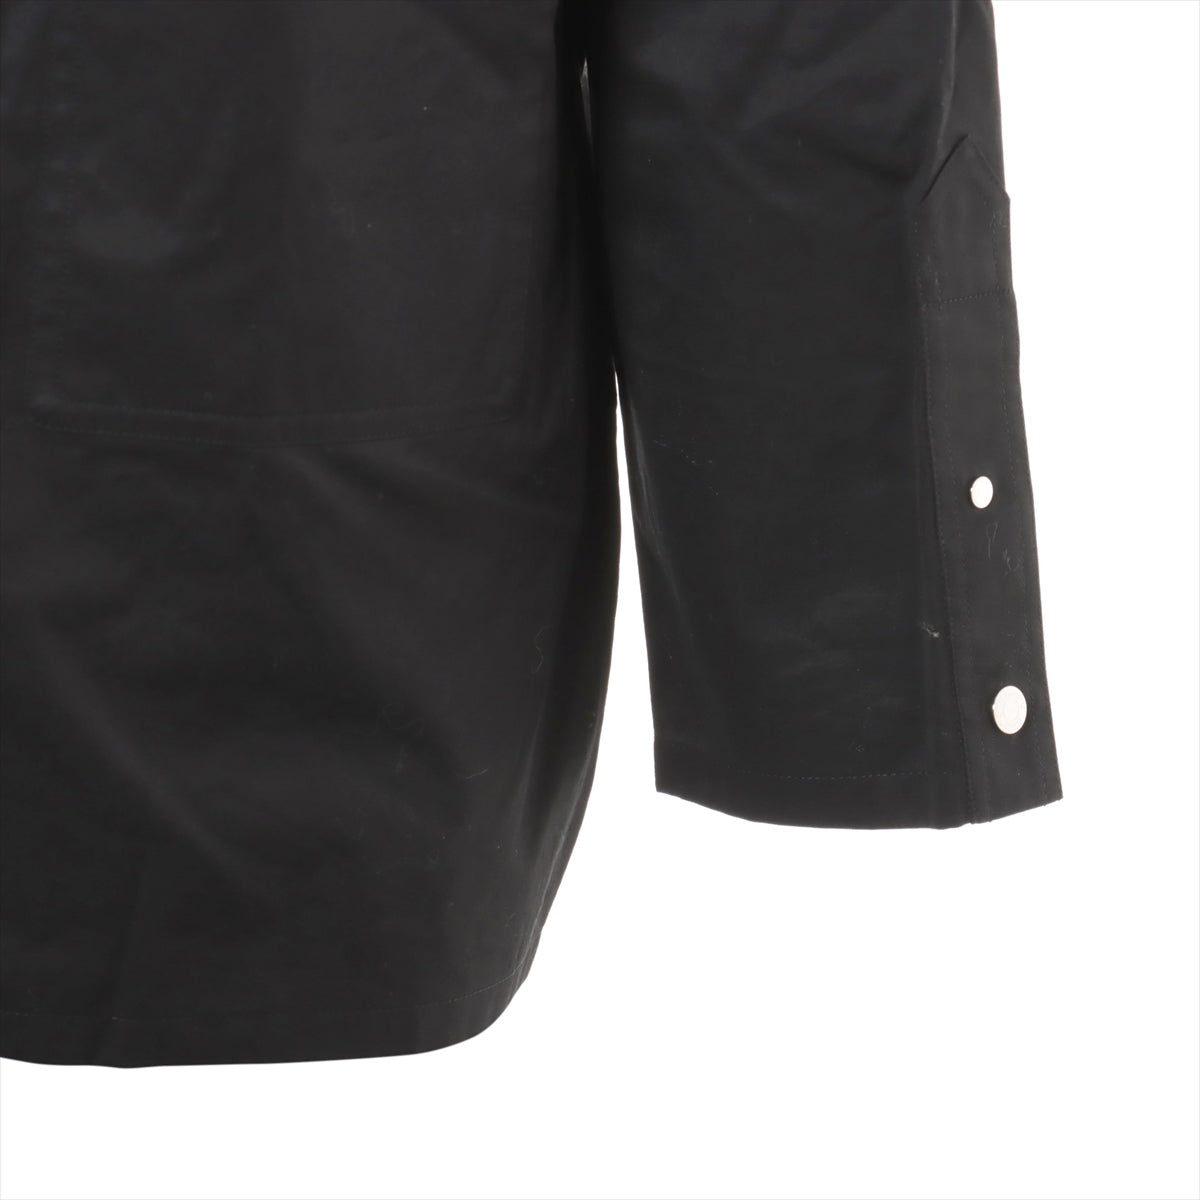 Hermès Cotton & Polyester Shirt 34 Ladies' Black  17-7604 Serie button Oversized